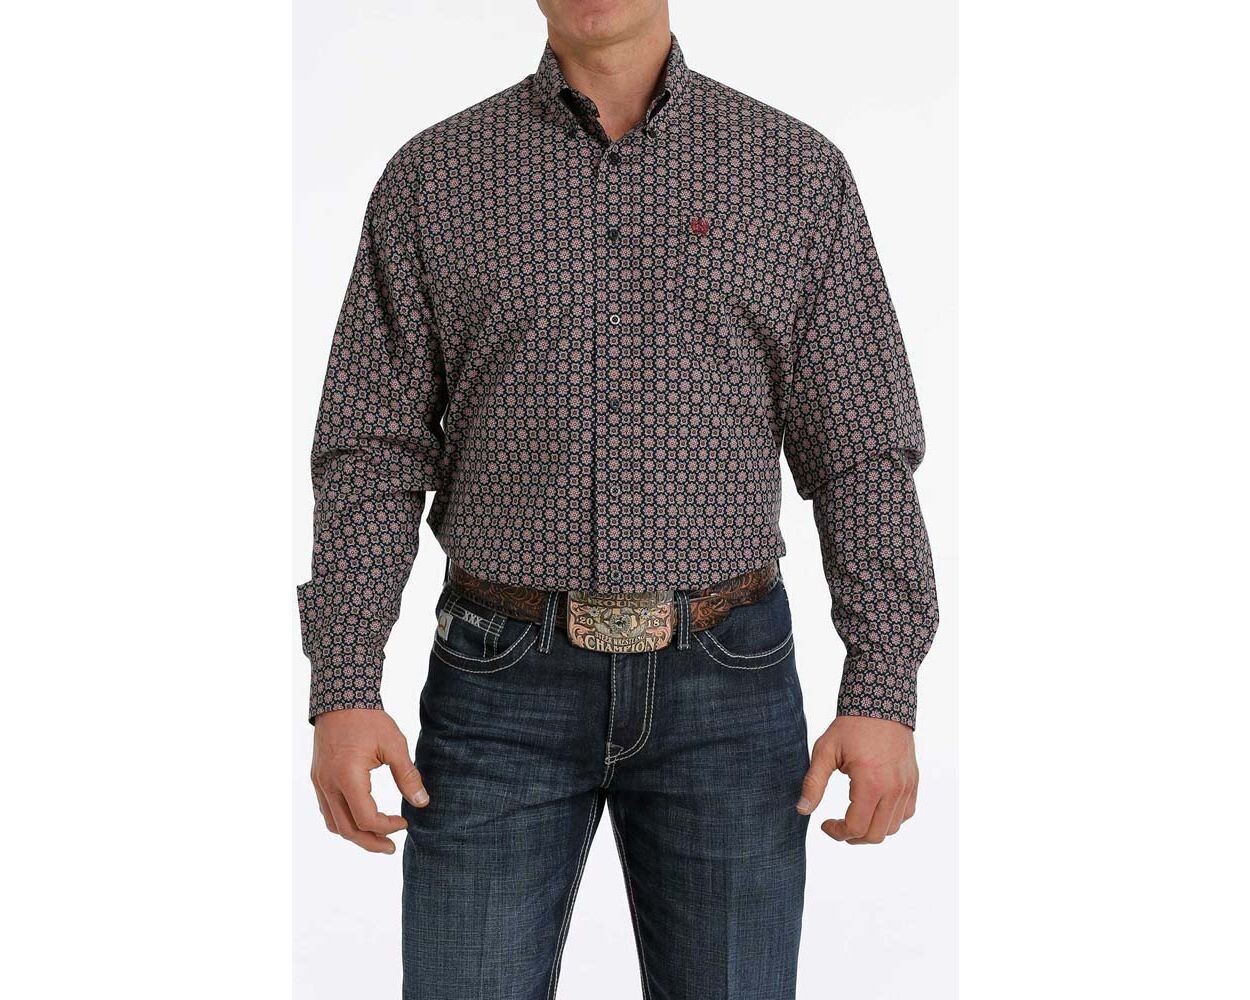 Cinch Men's Classic Fit Long Sleeve Button Down Shirt